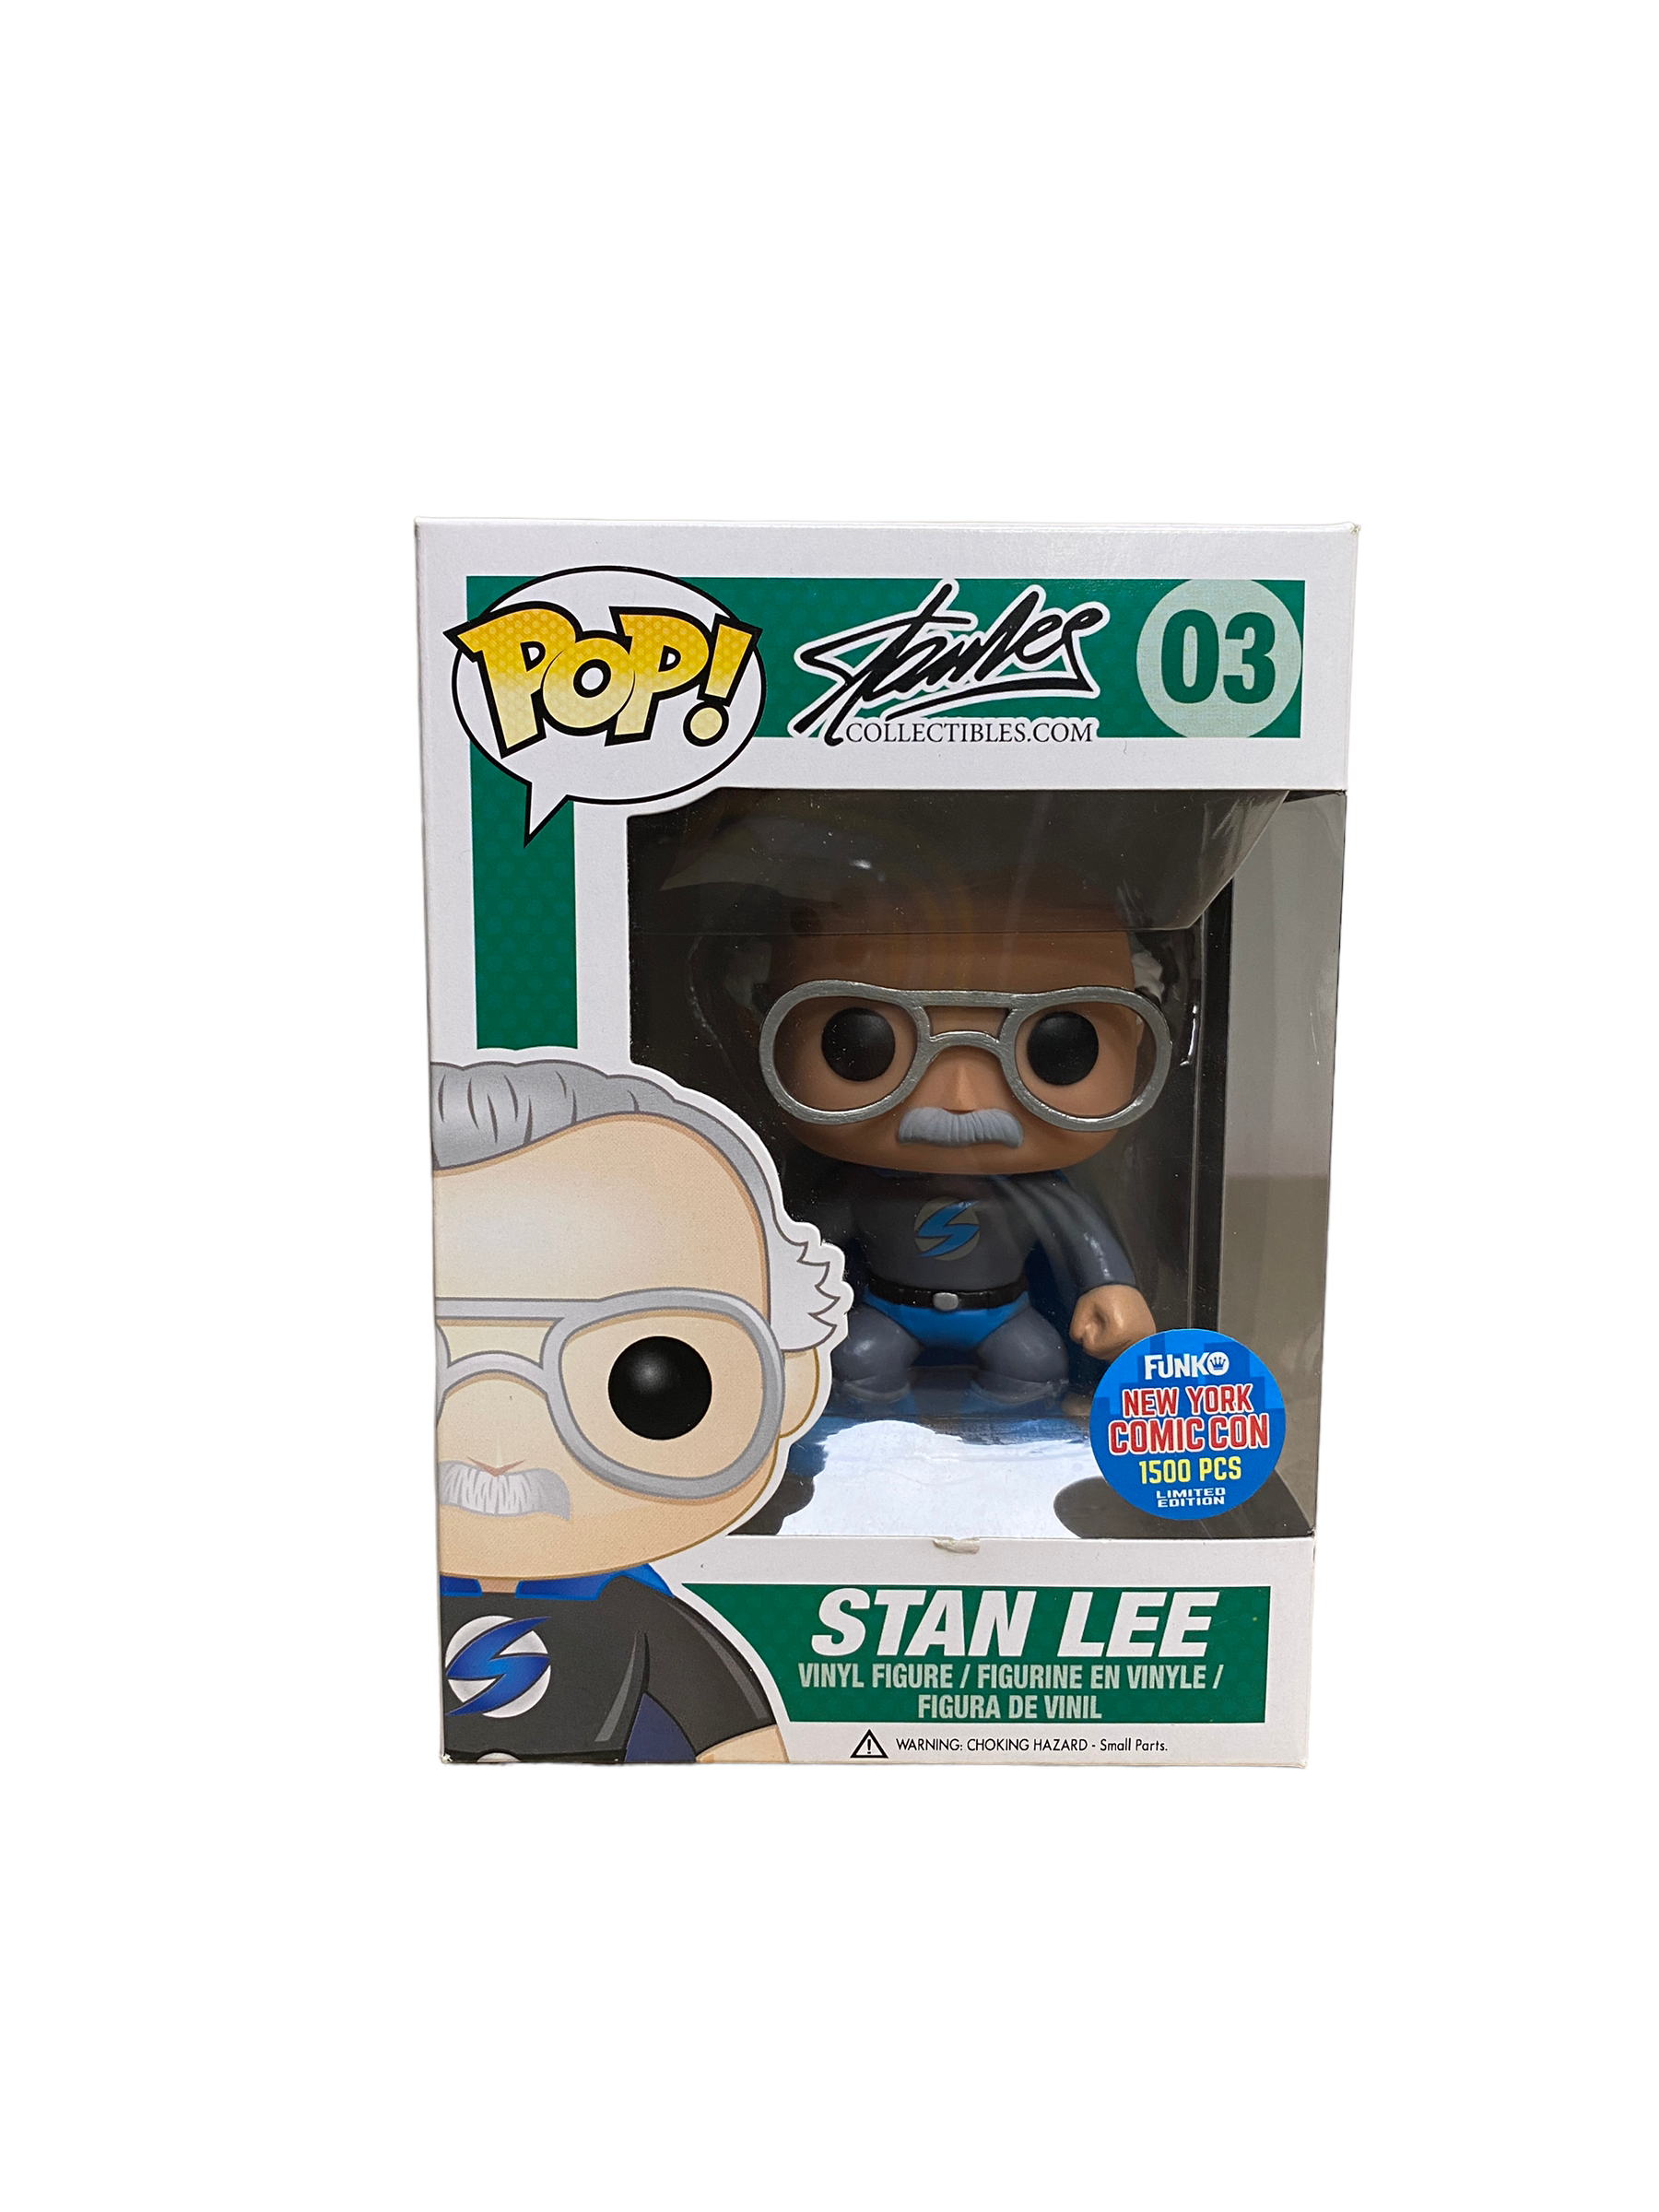 Stan Lee #03 (Superhero) Funko Pop! - Stan Lee Collectibles - NYCC 2015 Exclusive LE1500 Pcs - Condition 8.75/10